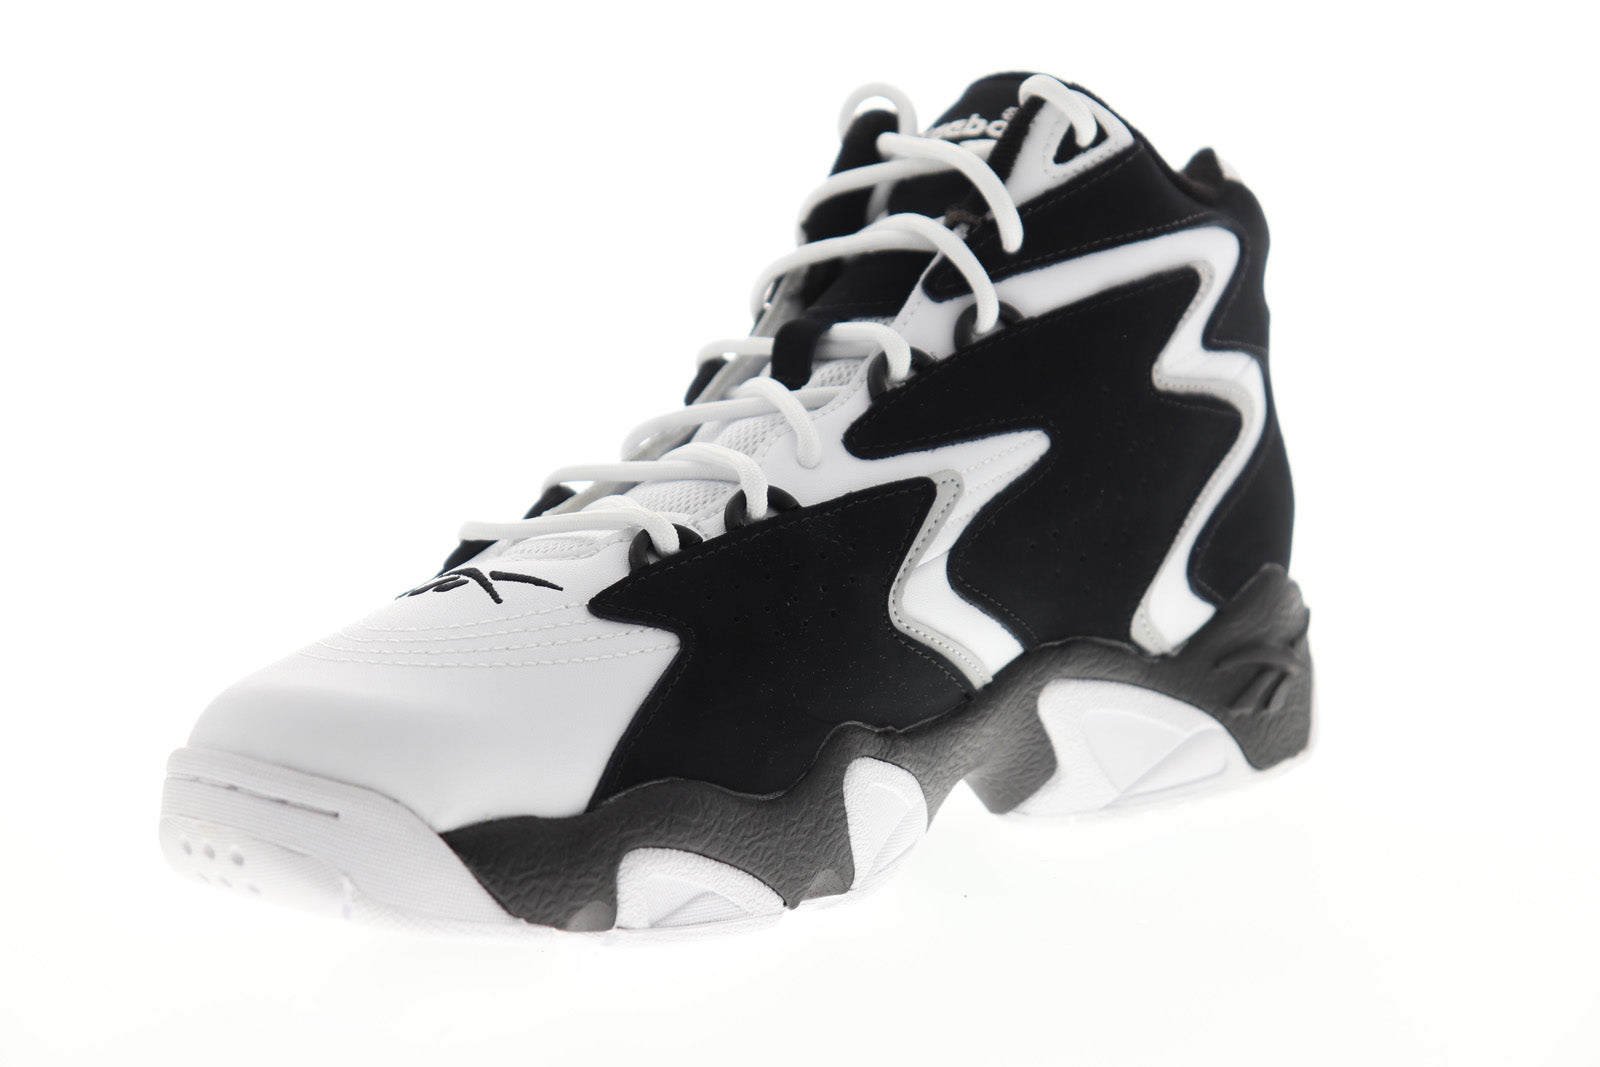 RARE🔥 Reebok ZigTech Basketball Sneakers Sz 11.5 Men's White Gray Zig  Zag Sole